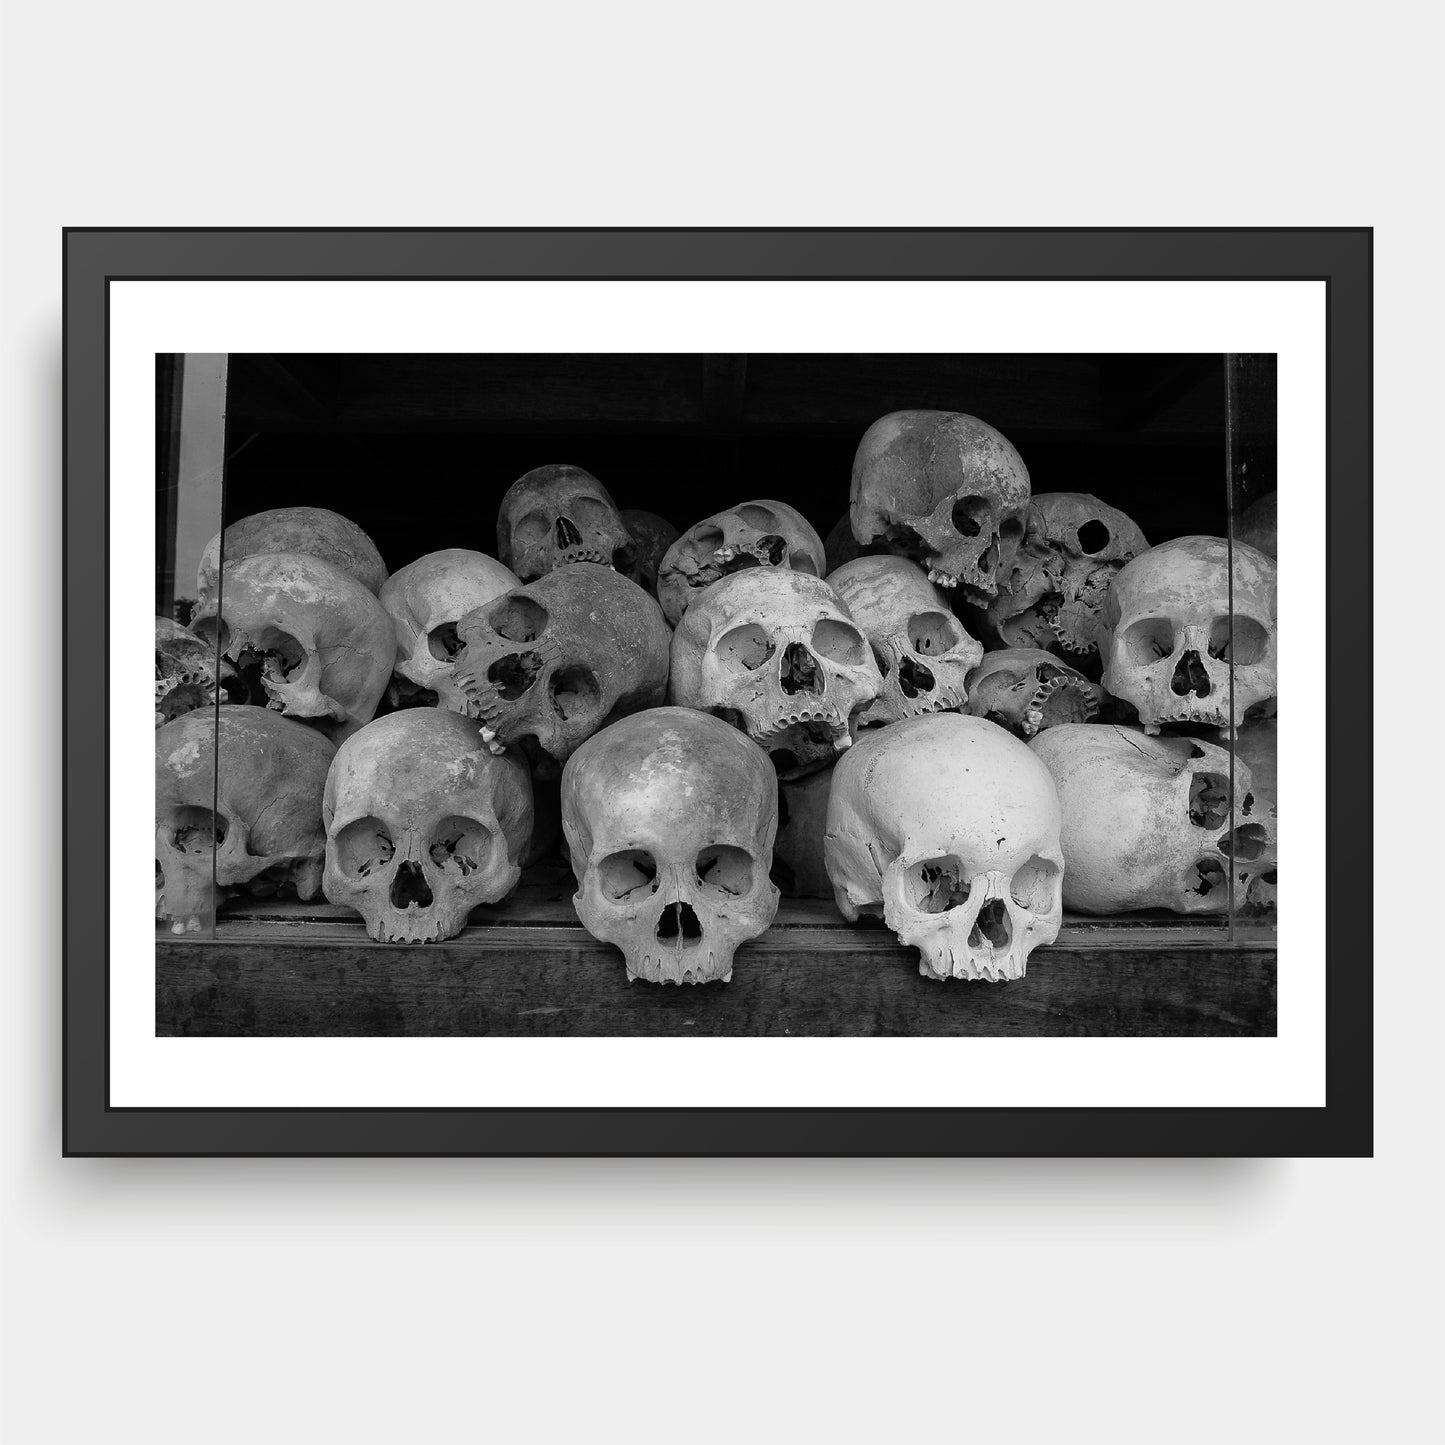 Killing Fields Memorial Site, Skulls, Cambodia